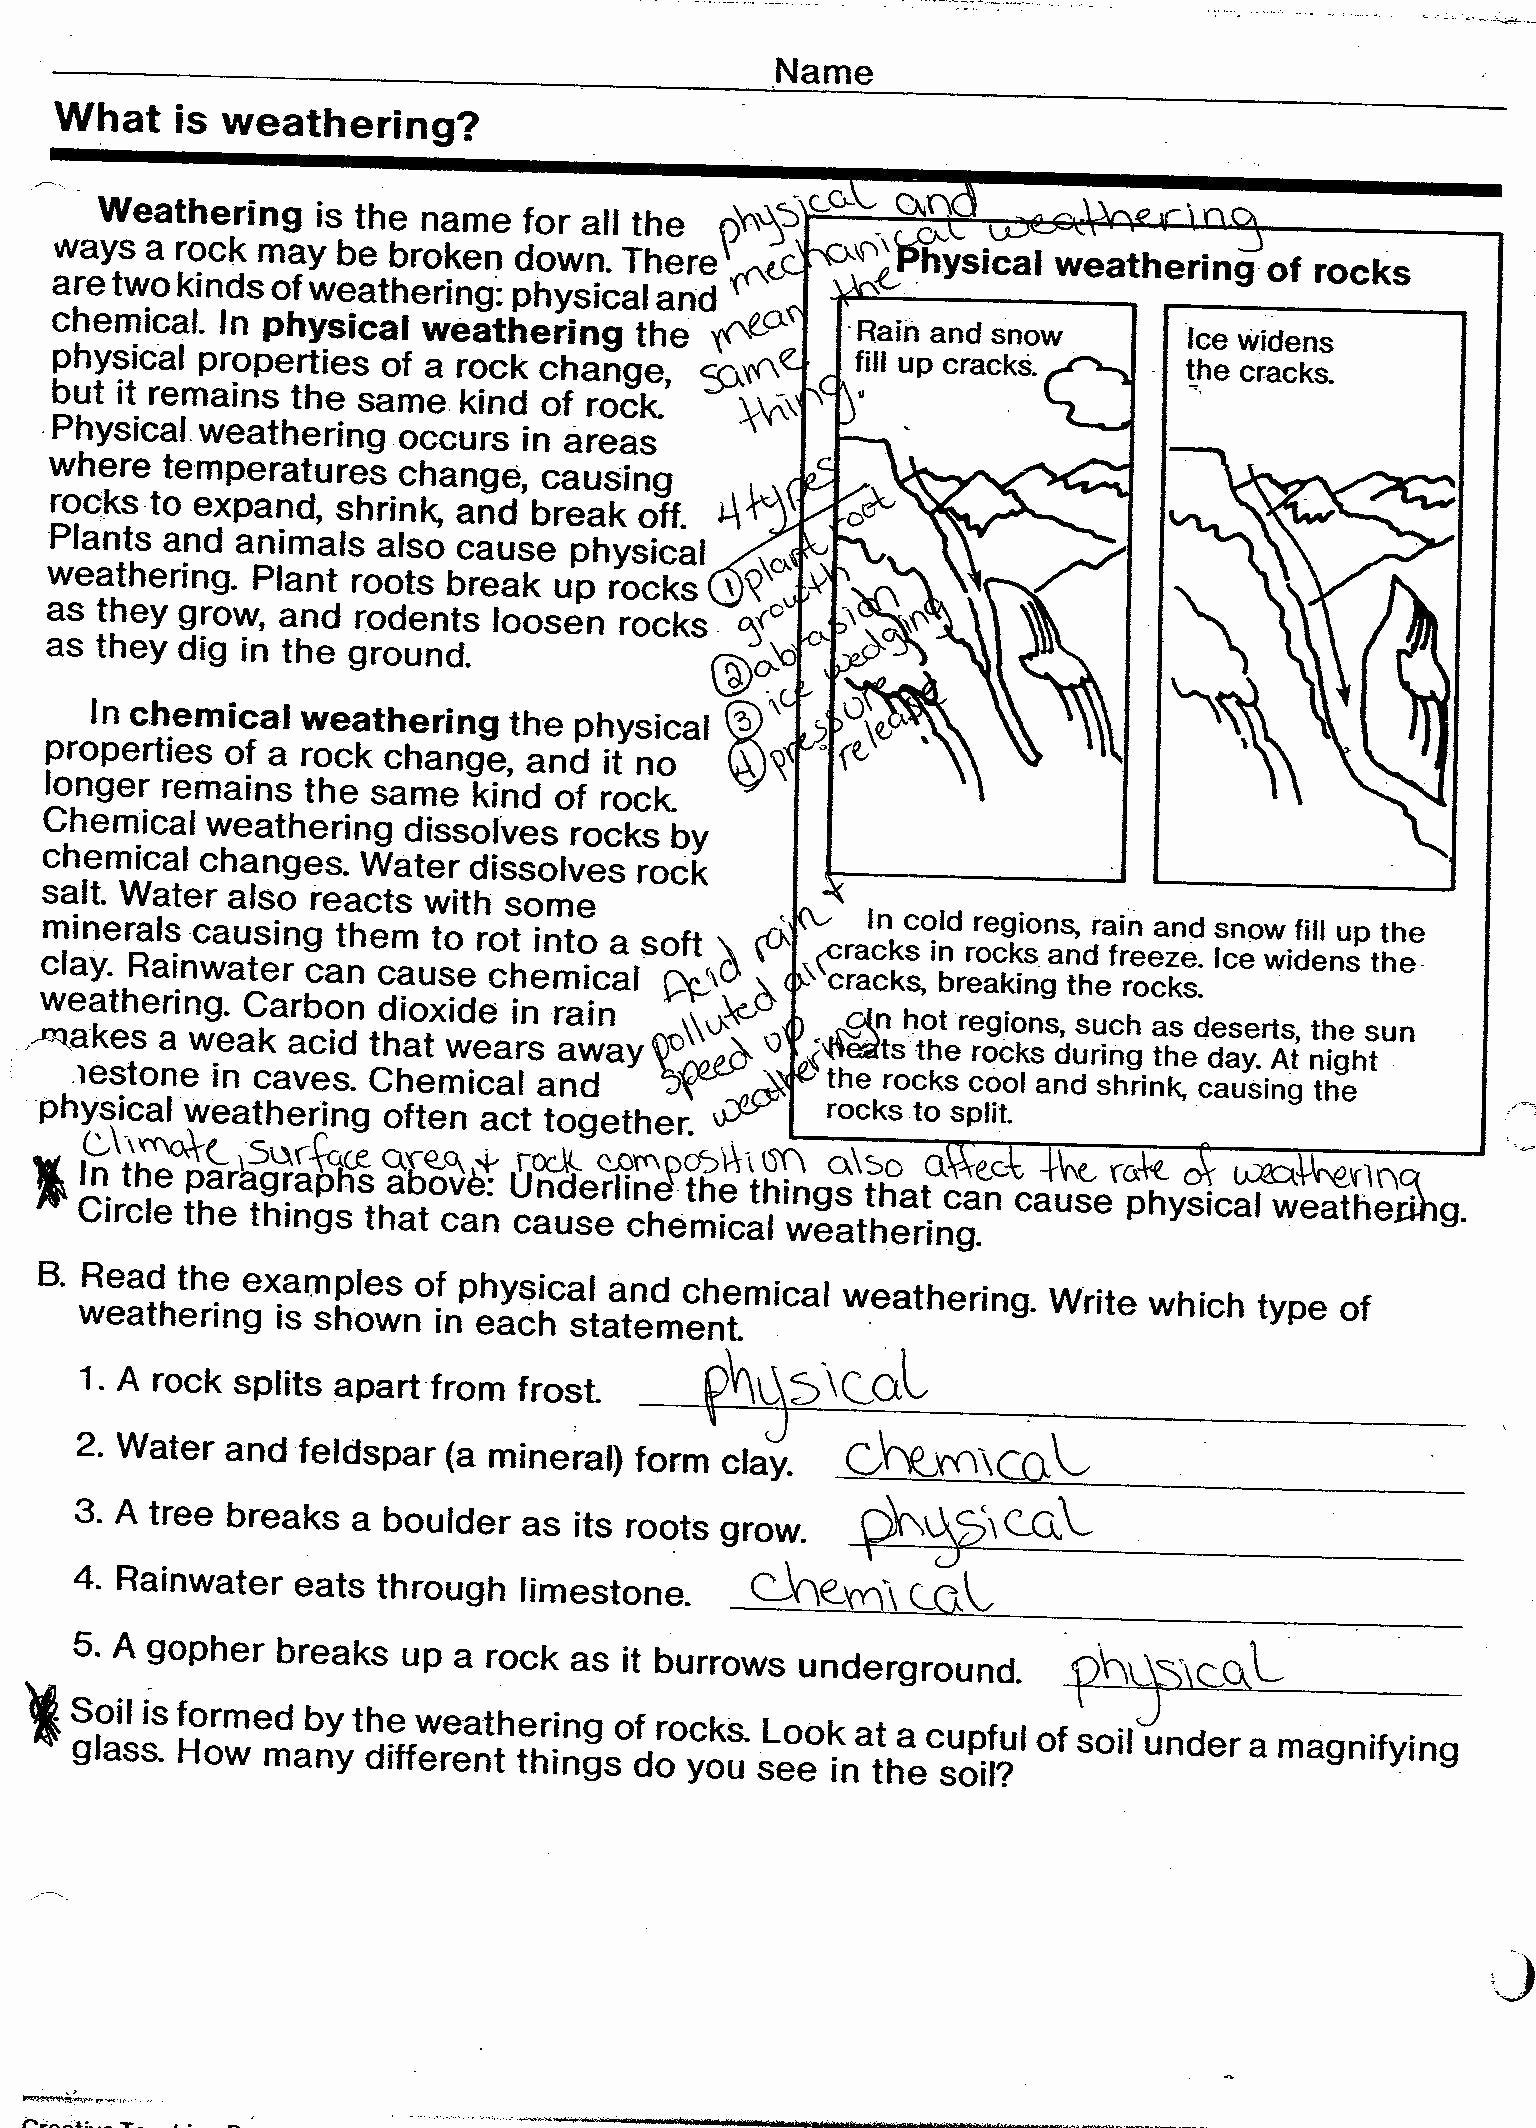 Weathering and Erosion Worksheet Inspirational Weathering and Erosion Worksheets 4th Grade the Best